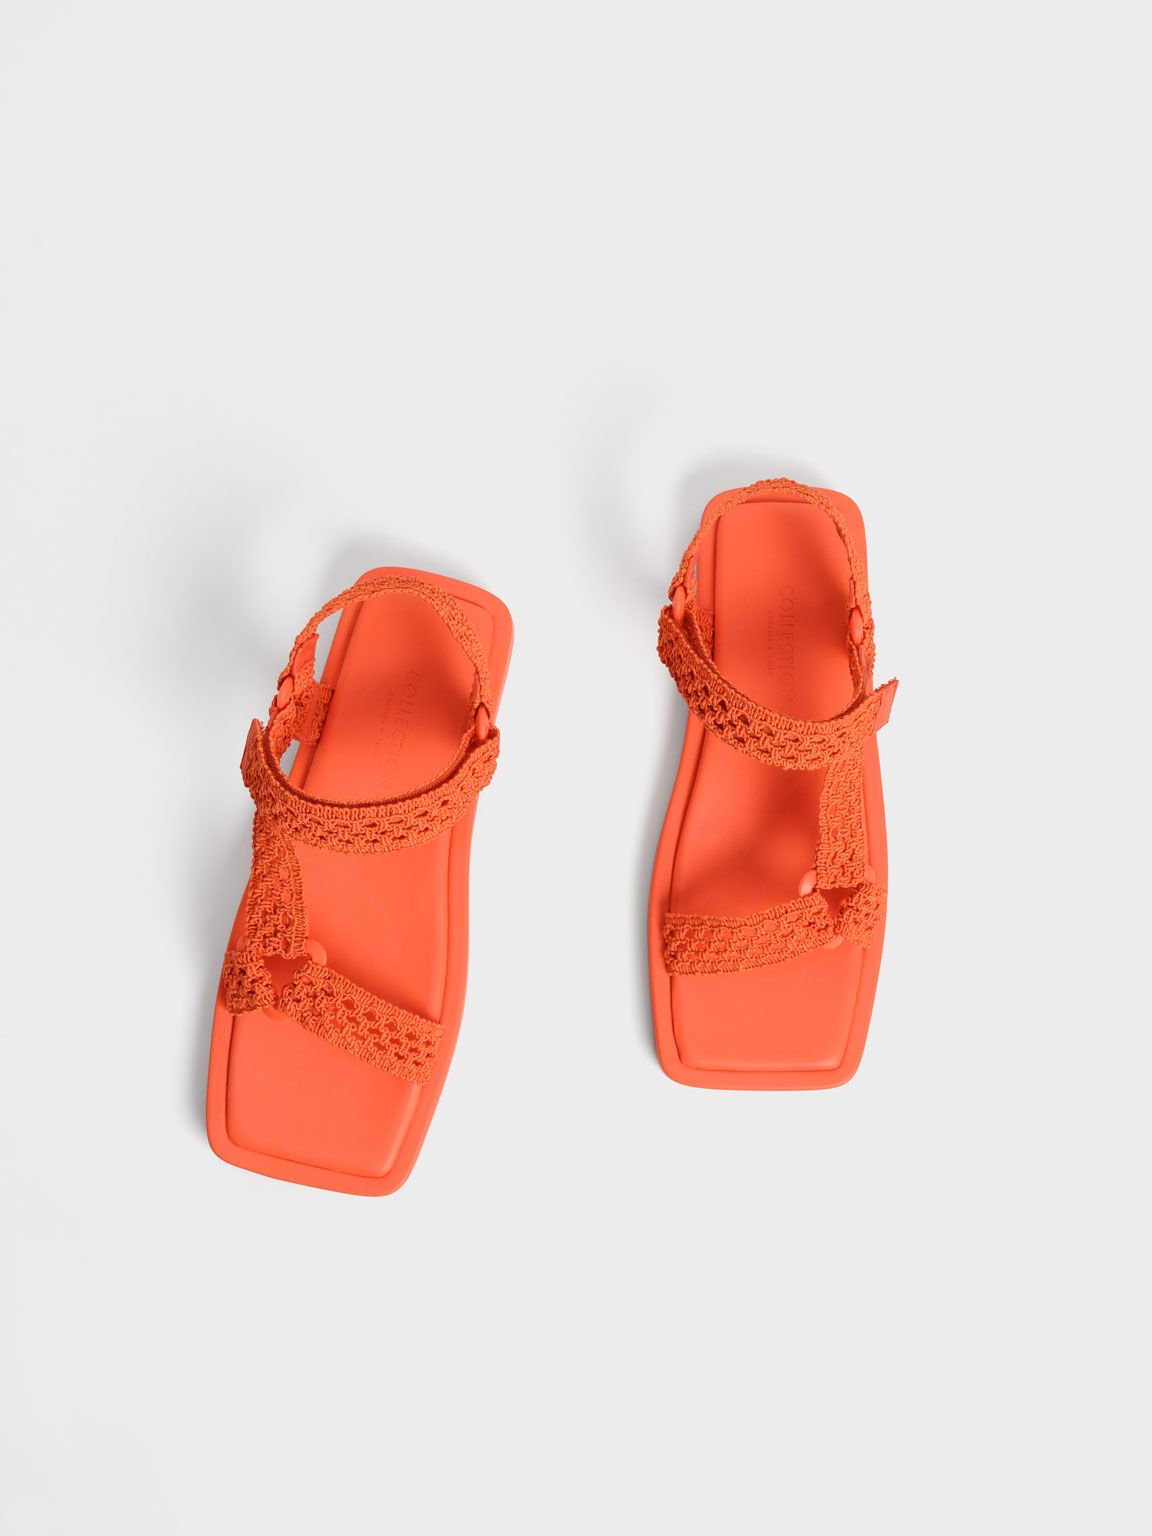 Vina Knitted Square-Toe Sandals, Coral, hi-res